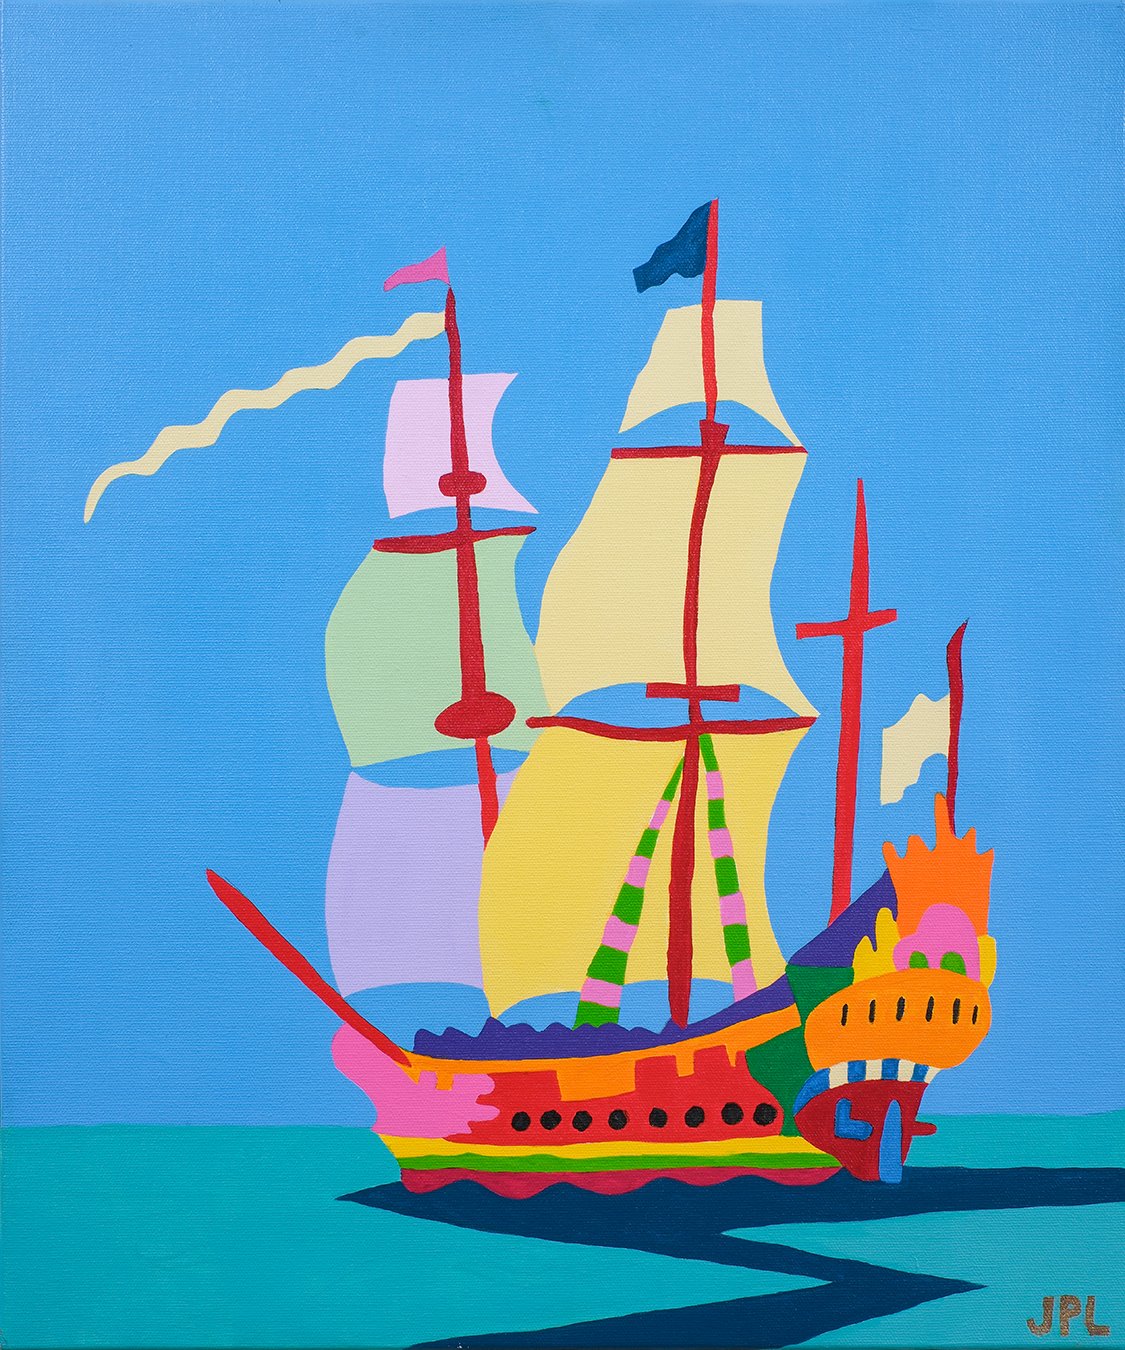   Ship study  Acrylic on canvas, 14x20 inches 